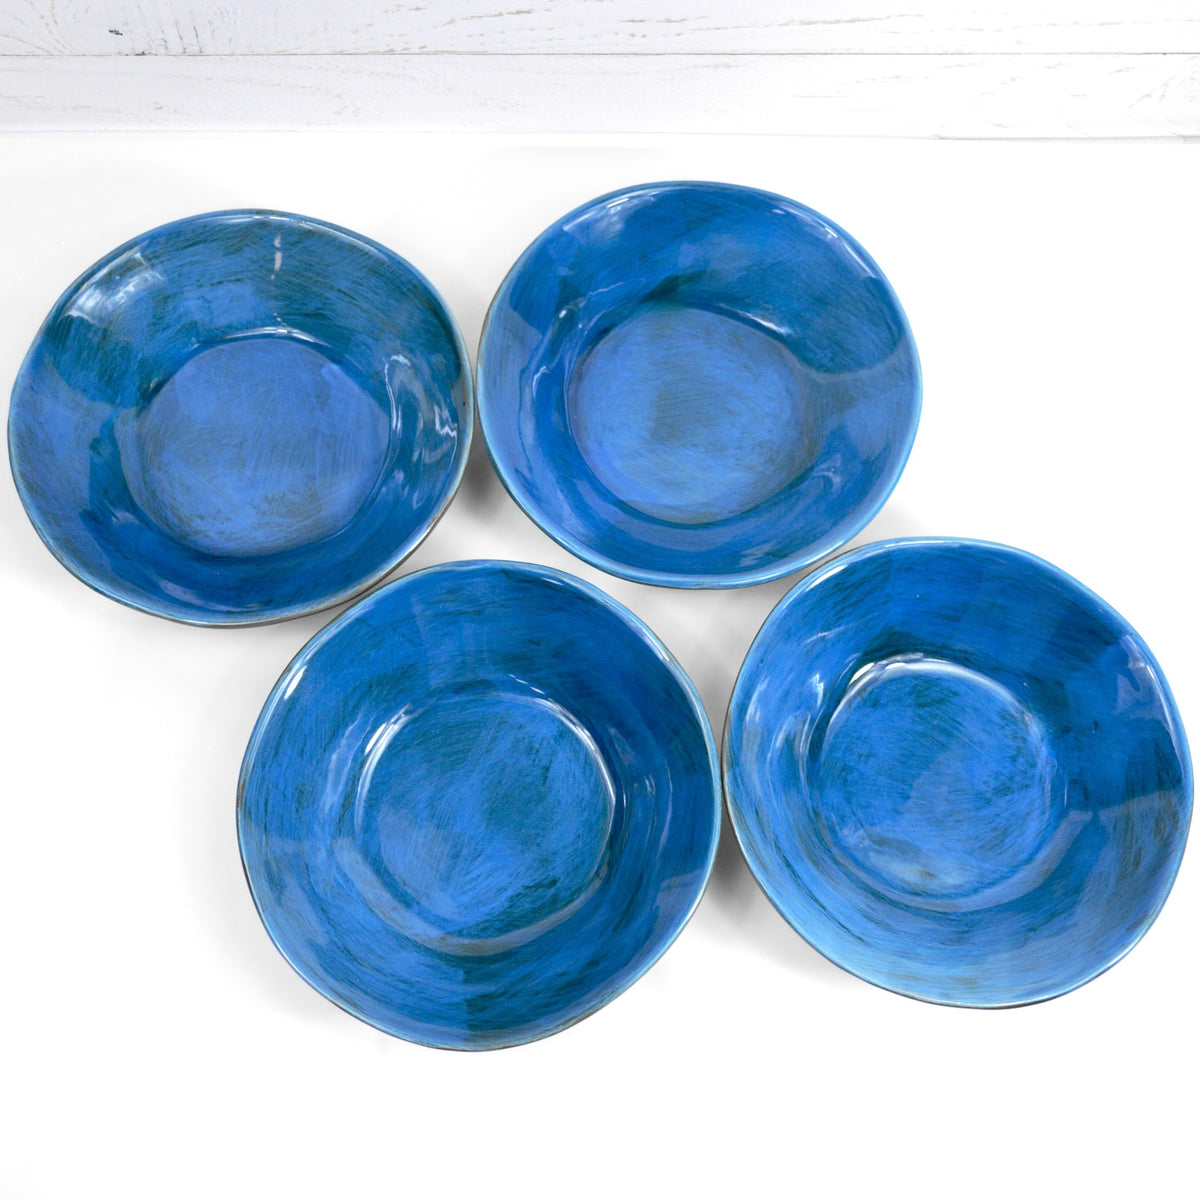 Tuscan Ceramic Pasta Bowl, Cobalt Blue, Made in Italy - My Italian Decor